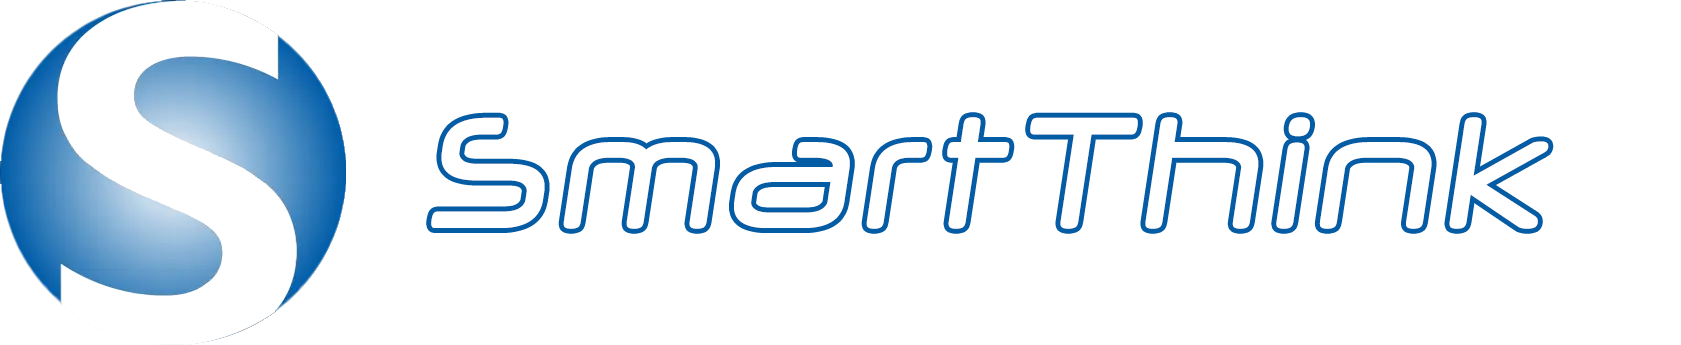 SmartThink LLC